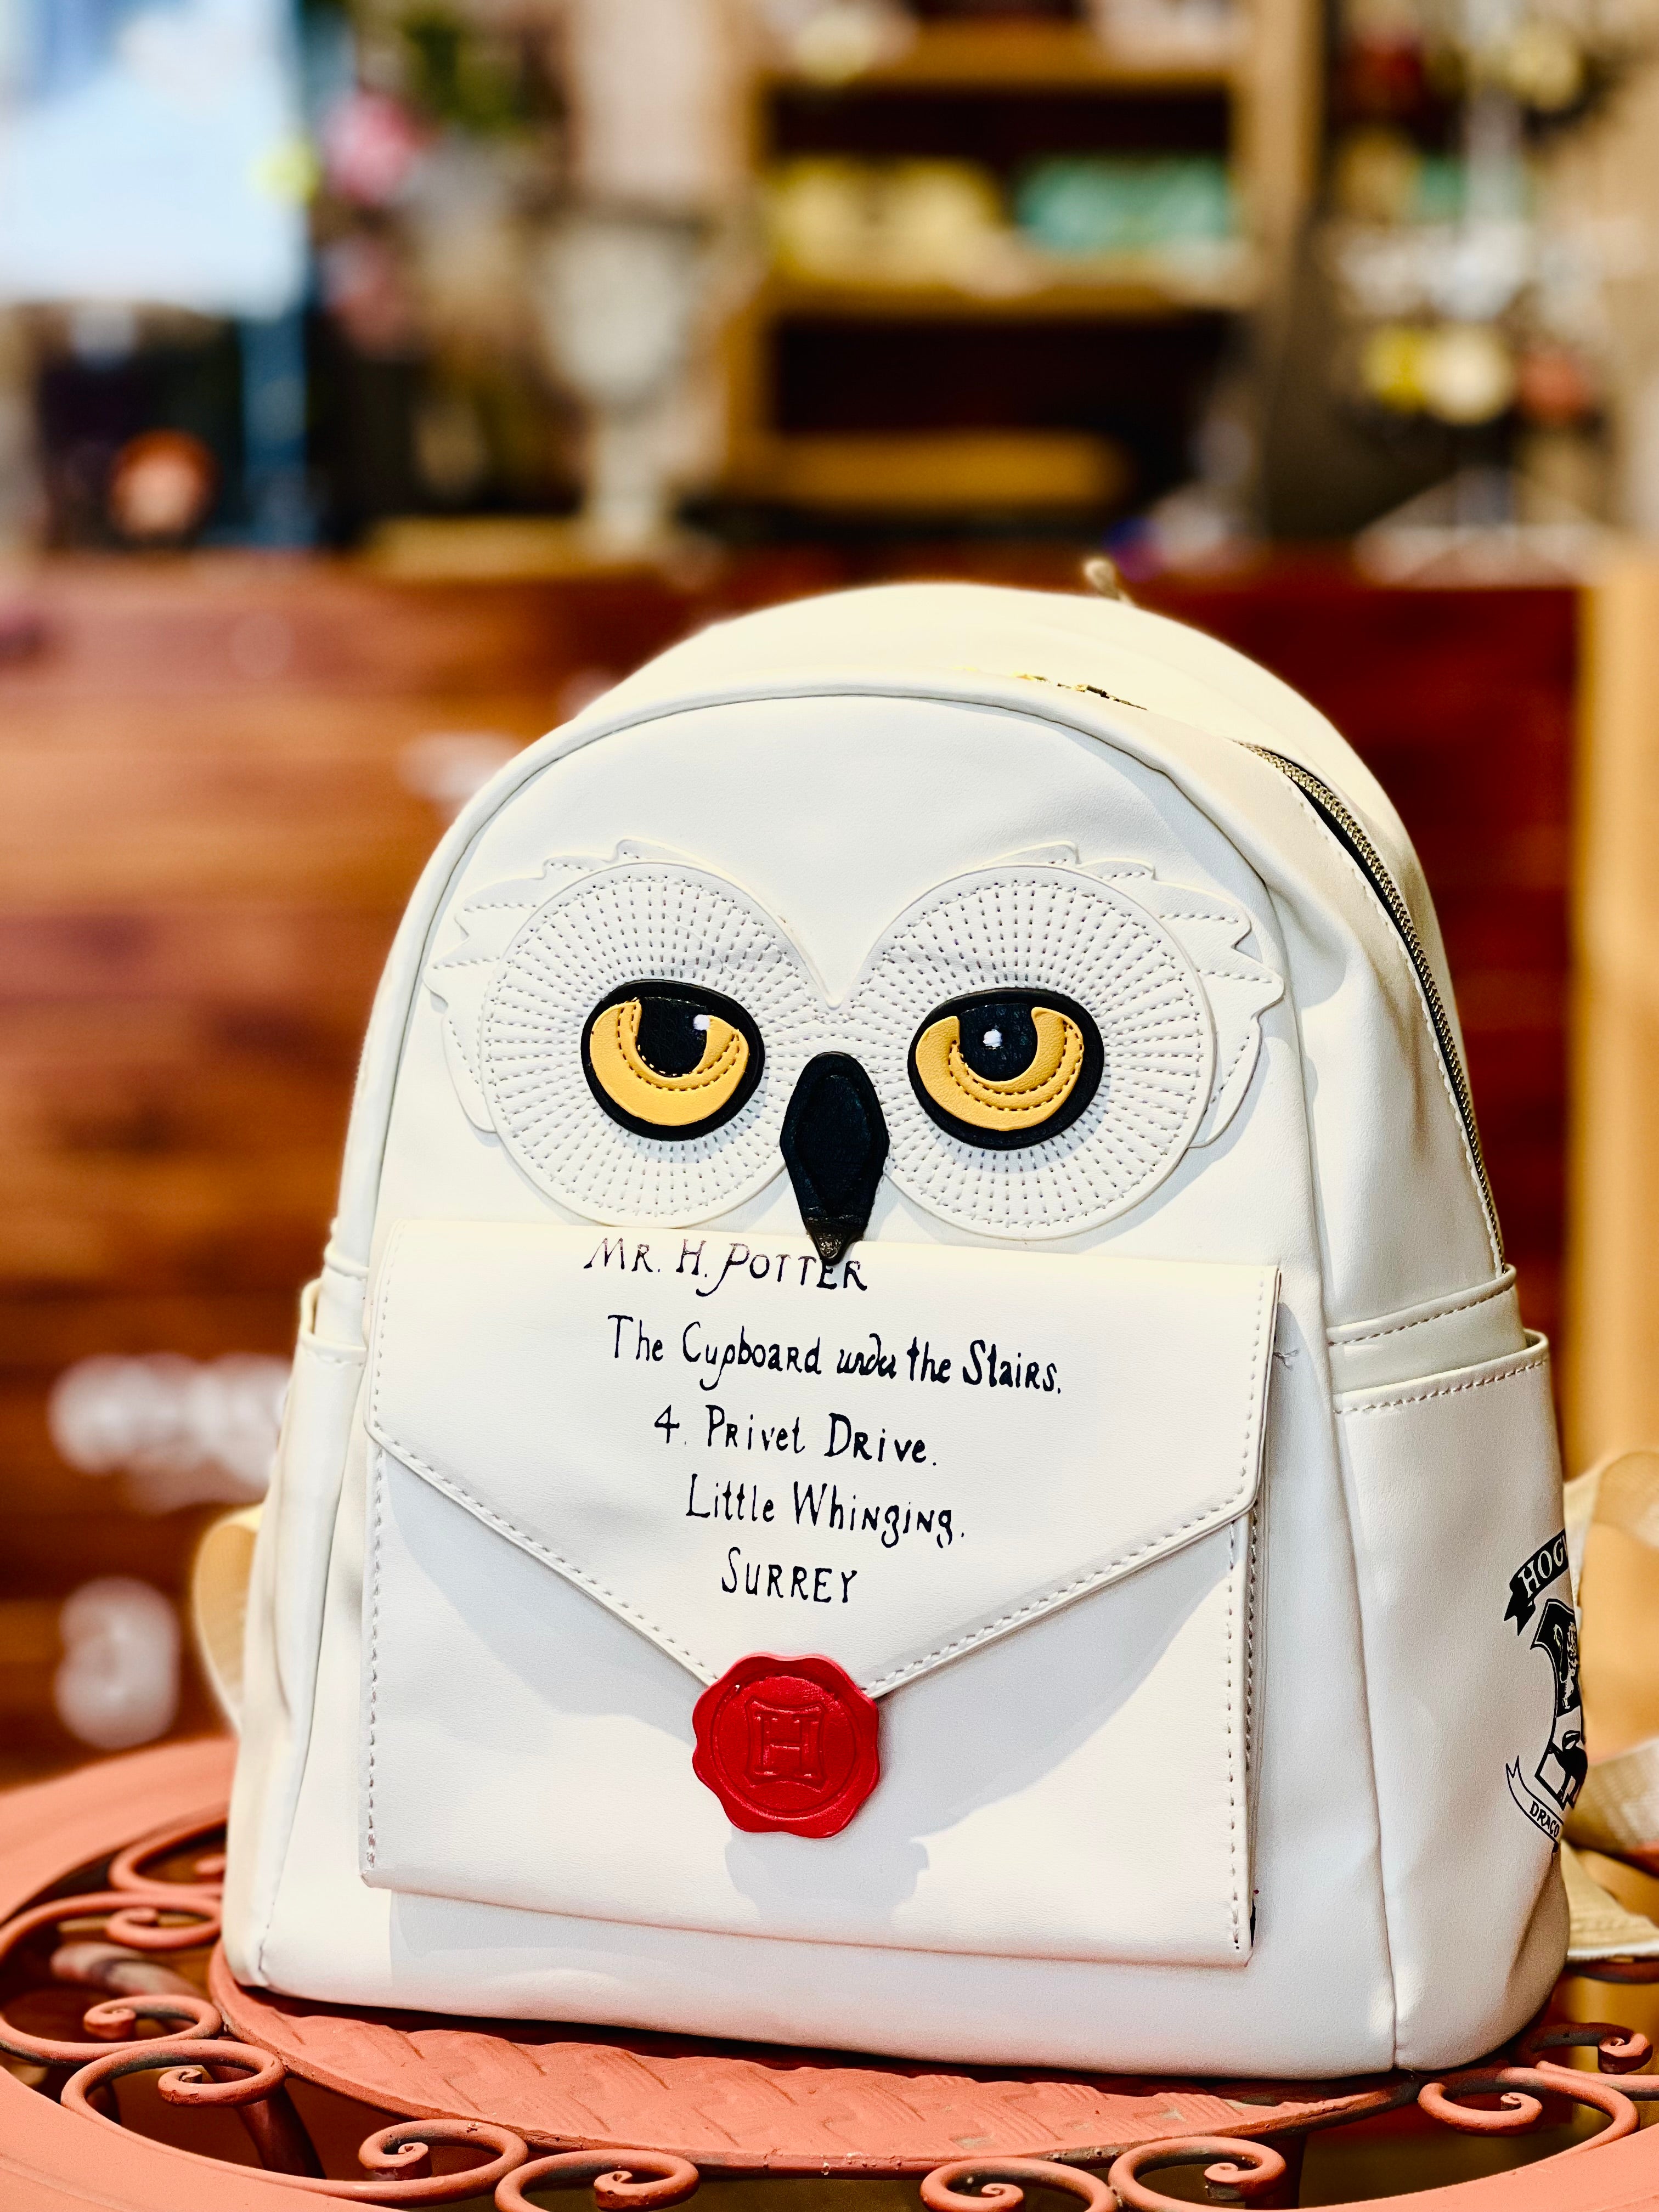 Hedwig's backpack